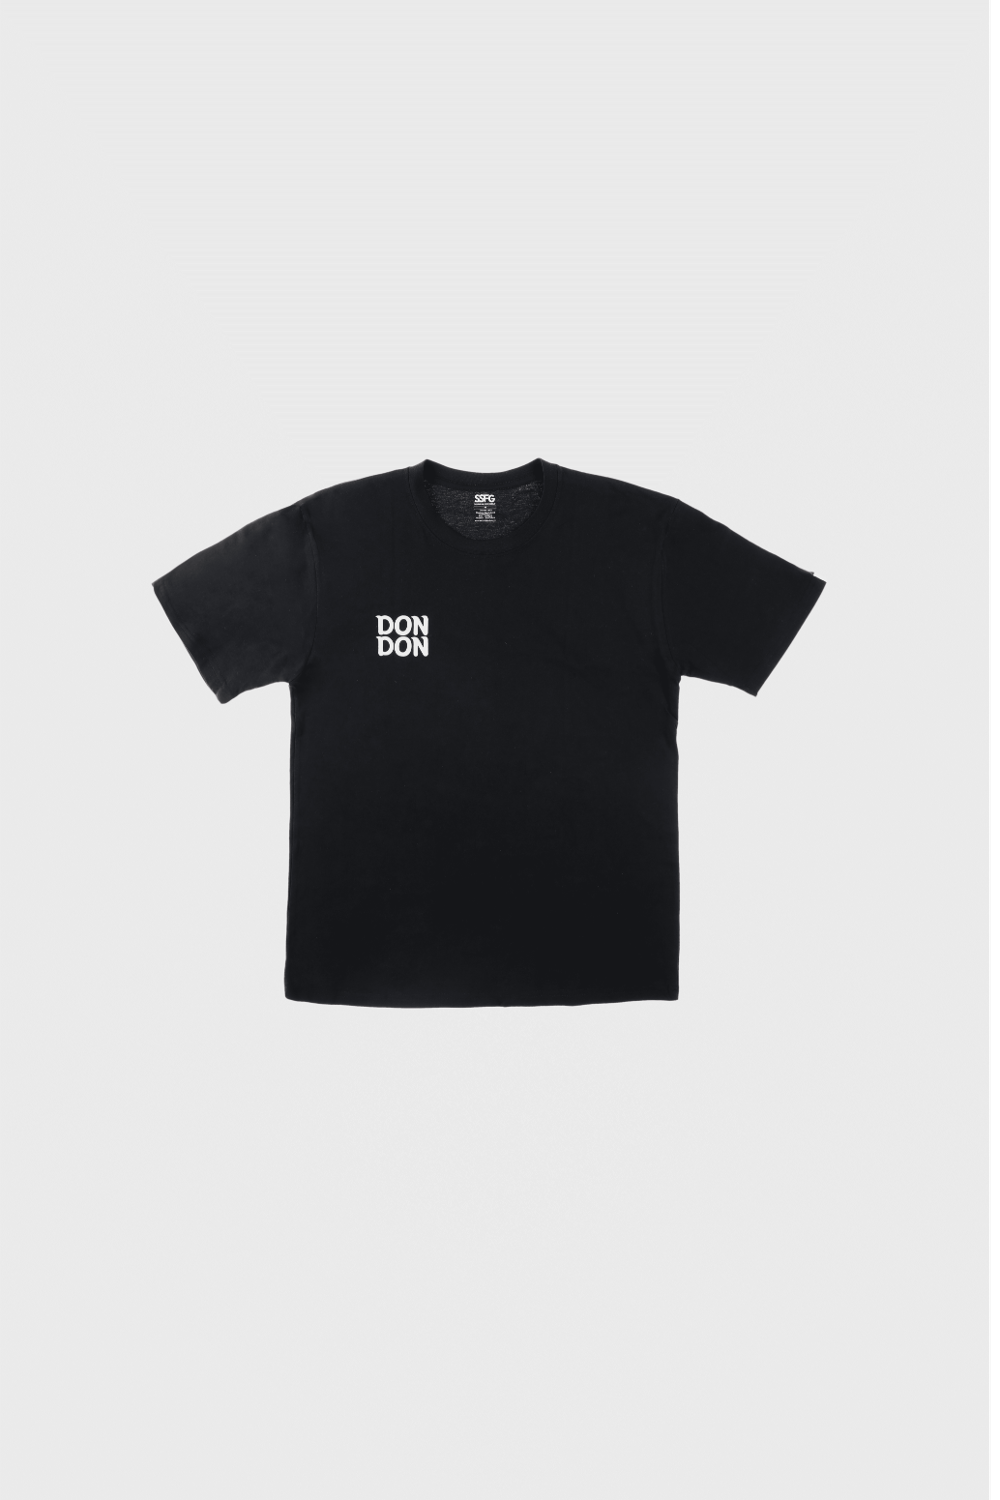 DONDON T-shirt Black